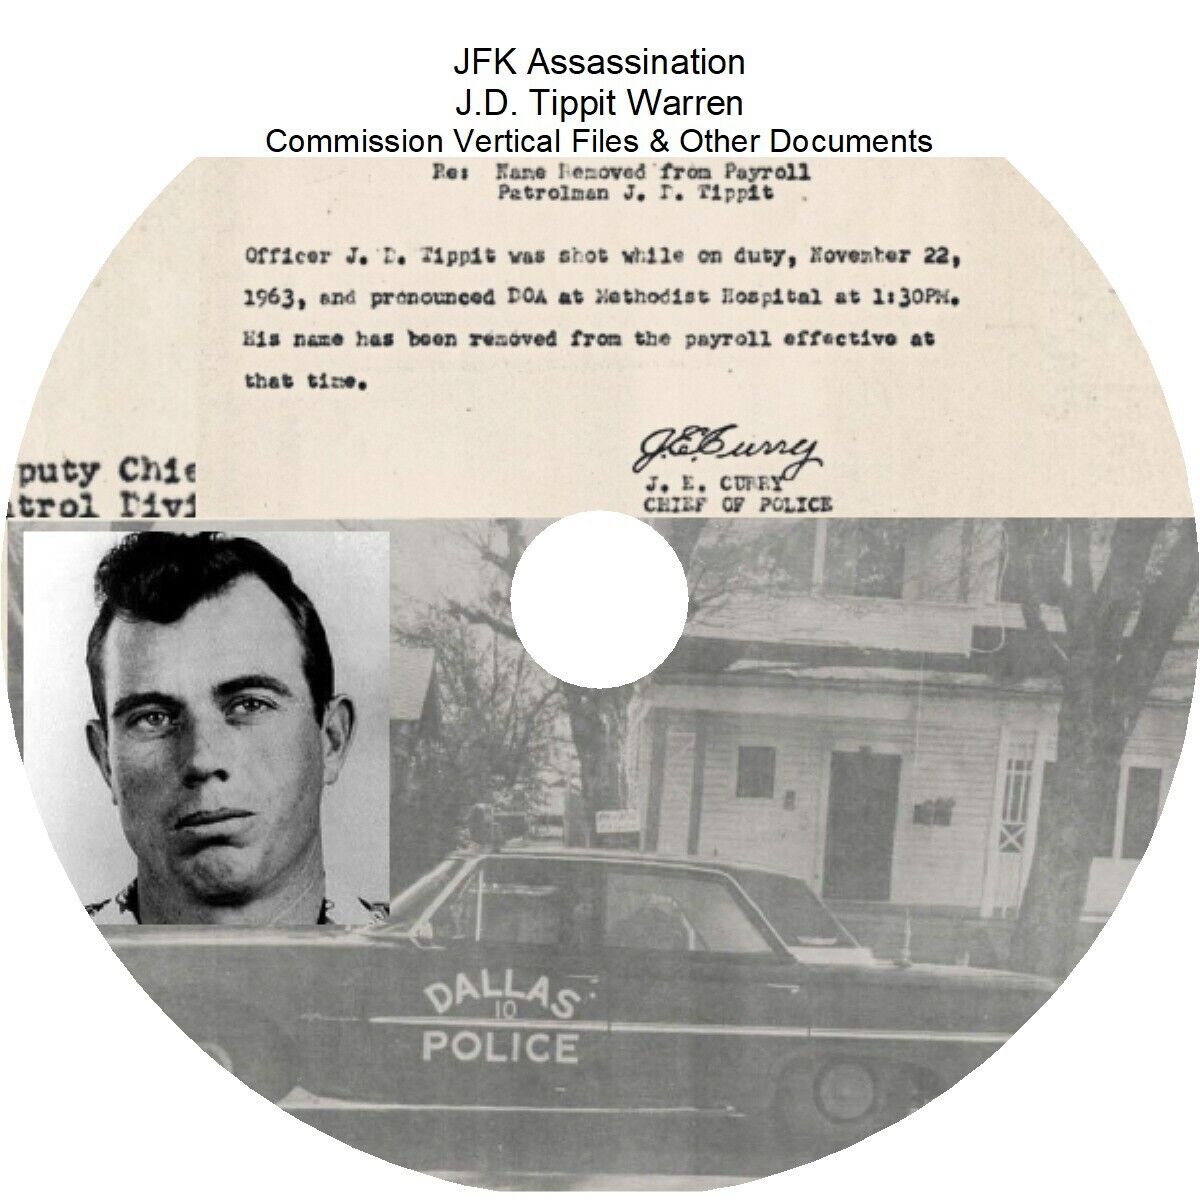 JFK Assassination: J.D. Tippit Warren Commission Vertical Files & Other Docs